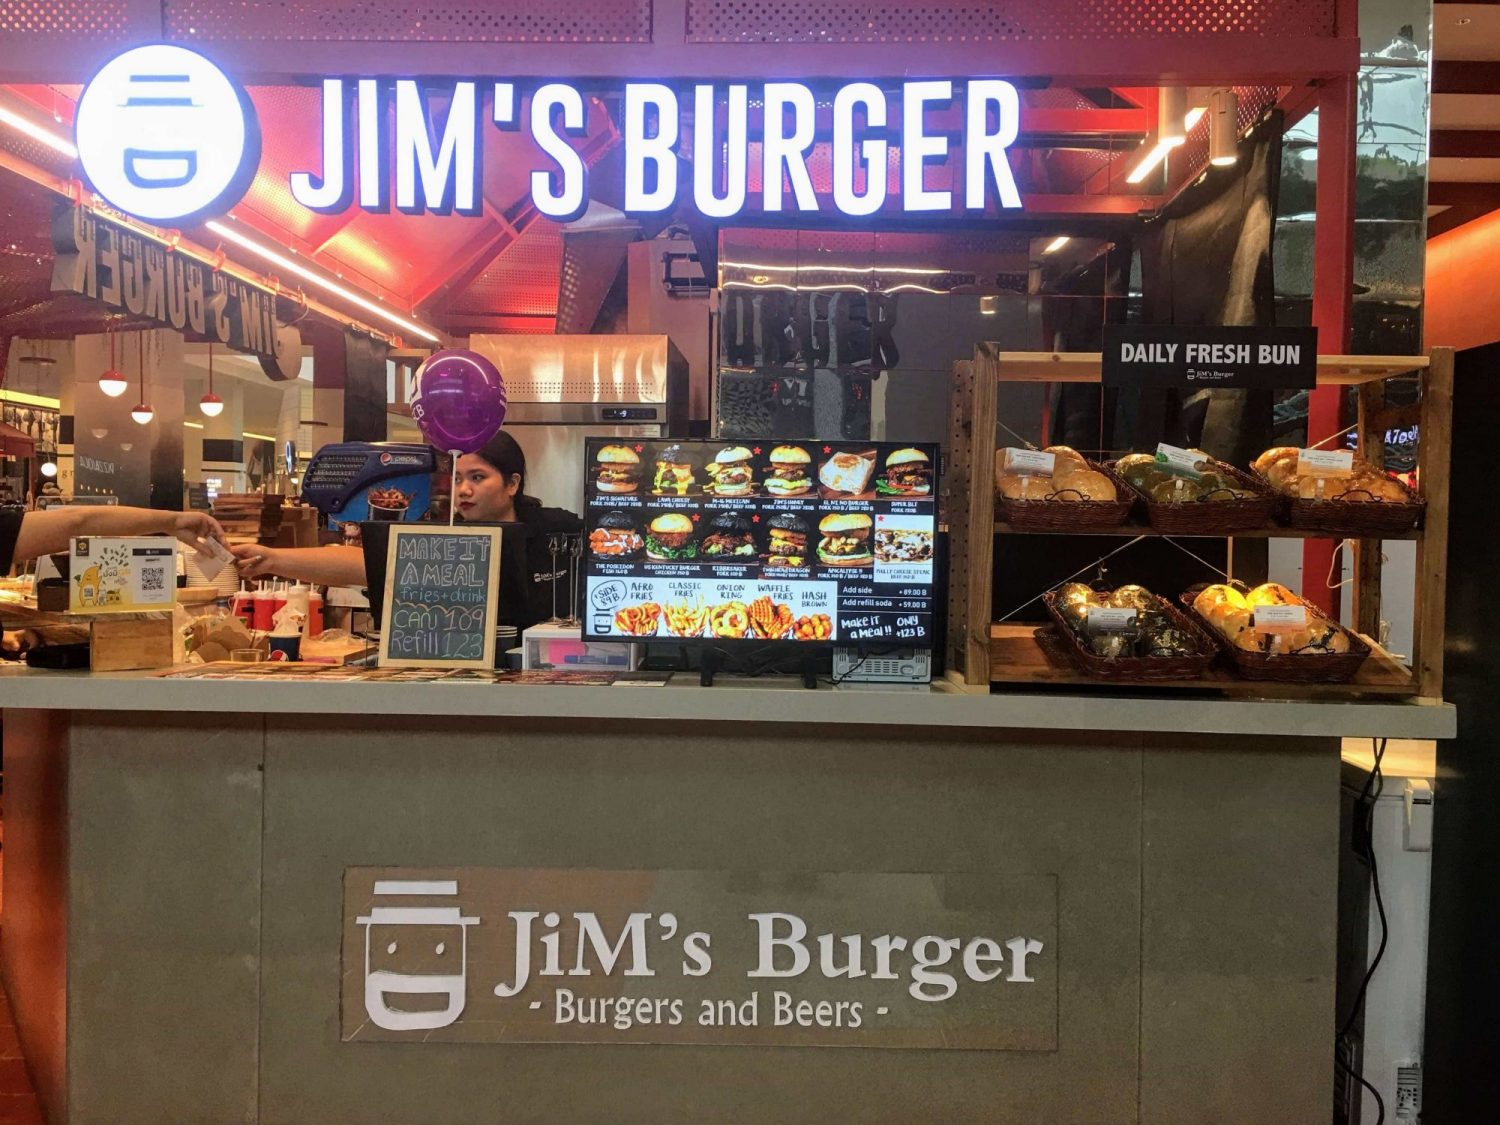 jimburger digital signage